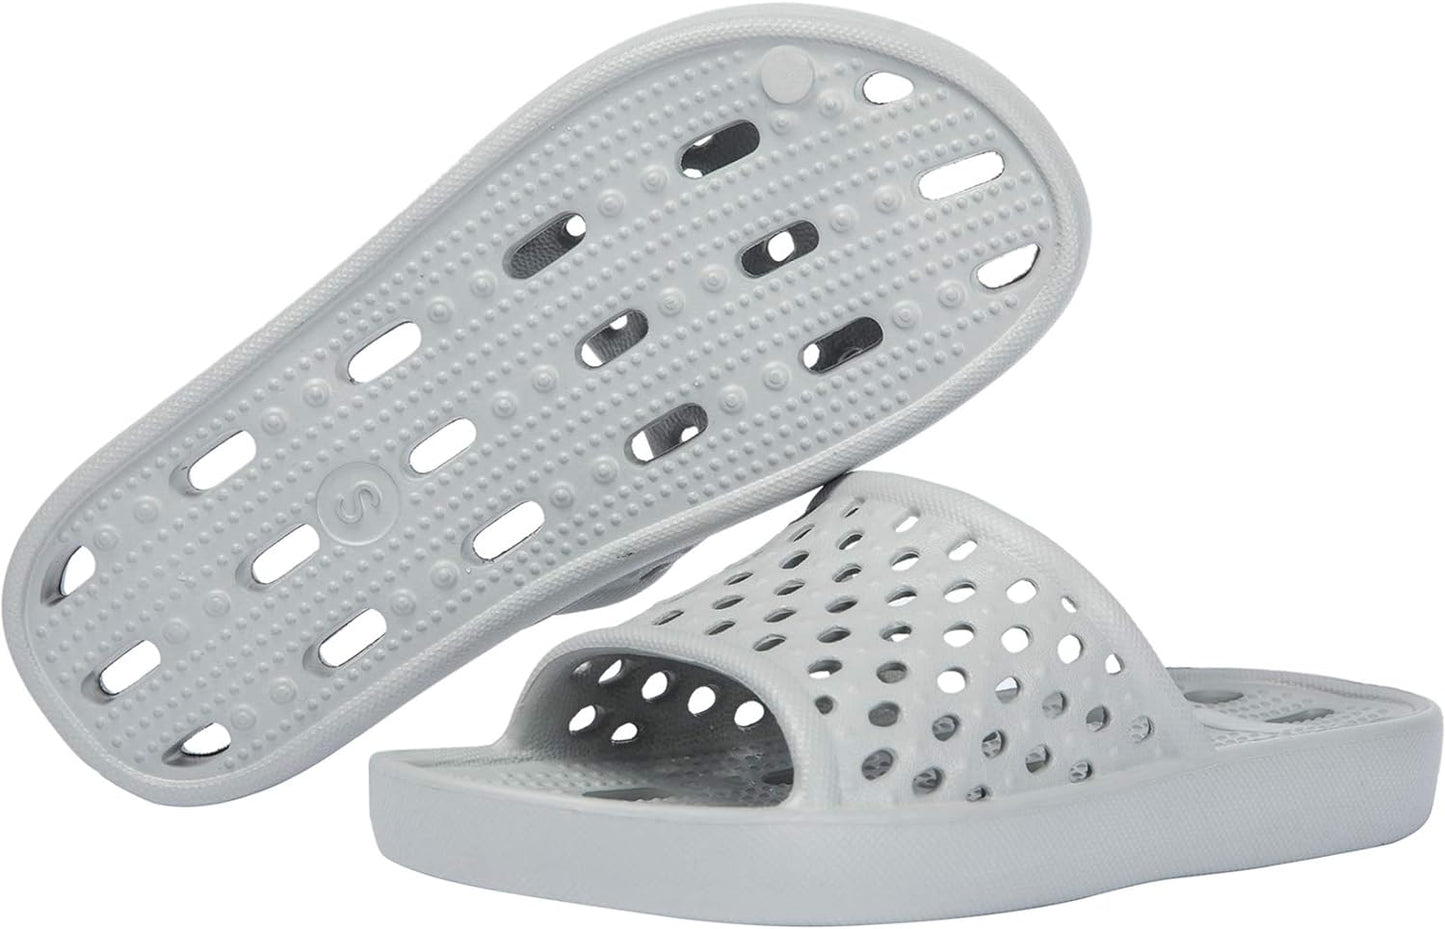 WOTTE Shower Sandals Women Quick Drying Bath Slippers Non Slip Dorm Shoes